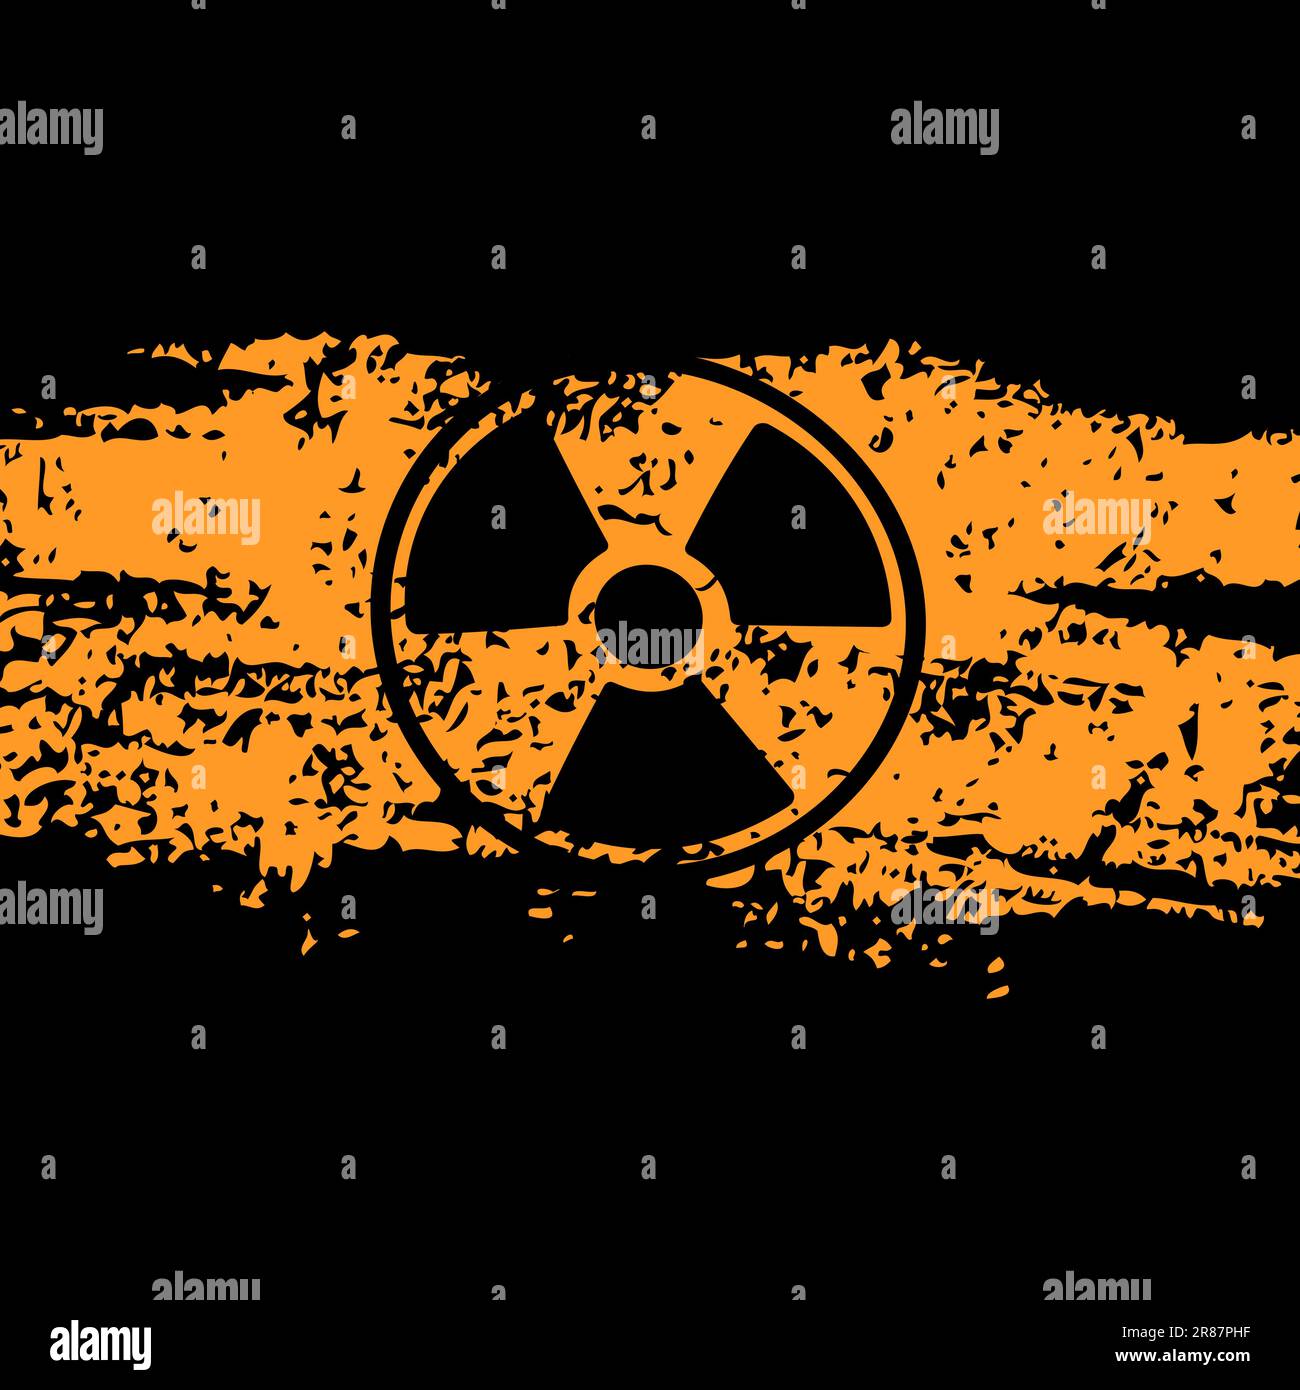 Grunge Radiation Warning Sign Background. Old Radioactive Toxic Danger Hazard Symbol Stock Vector